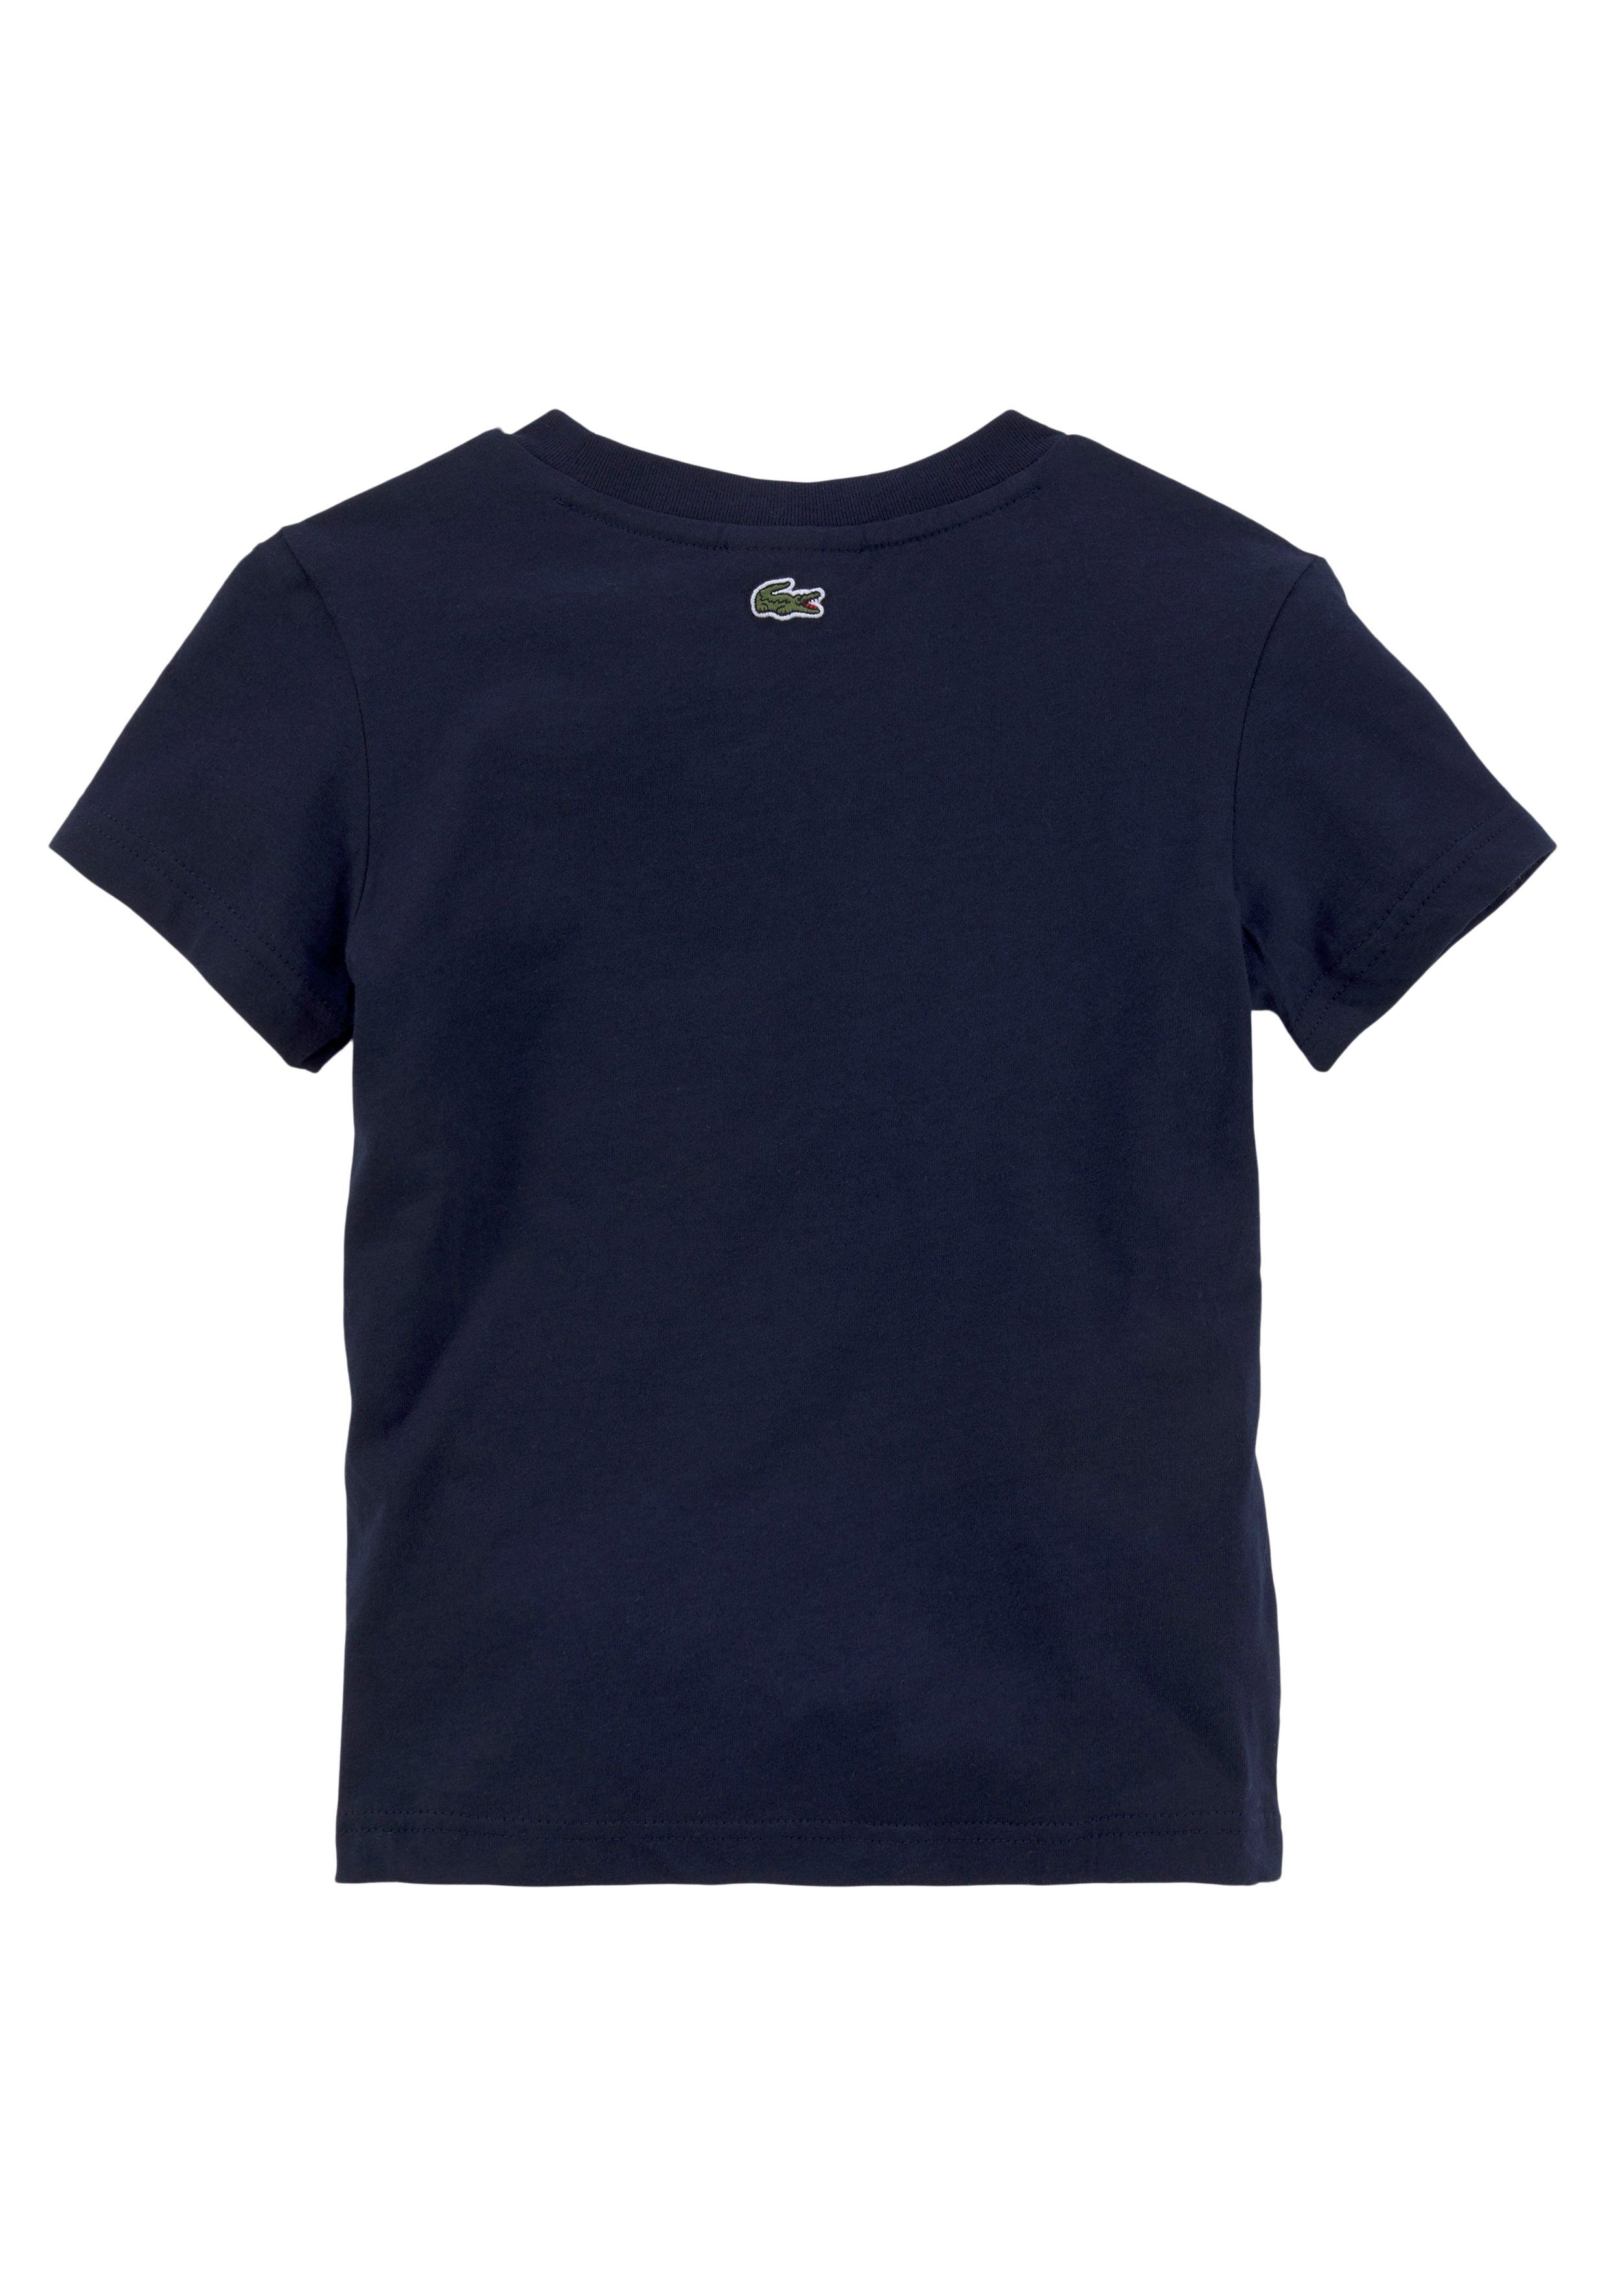 Lacoste T-Shirt mit Logodruck großem blue navy